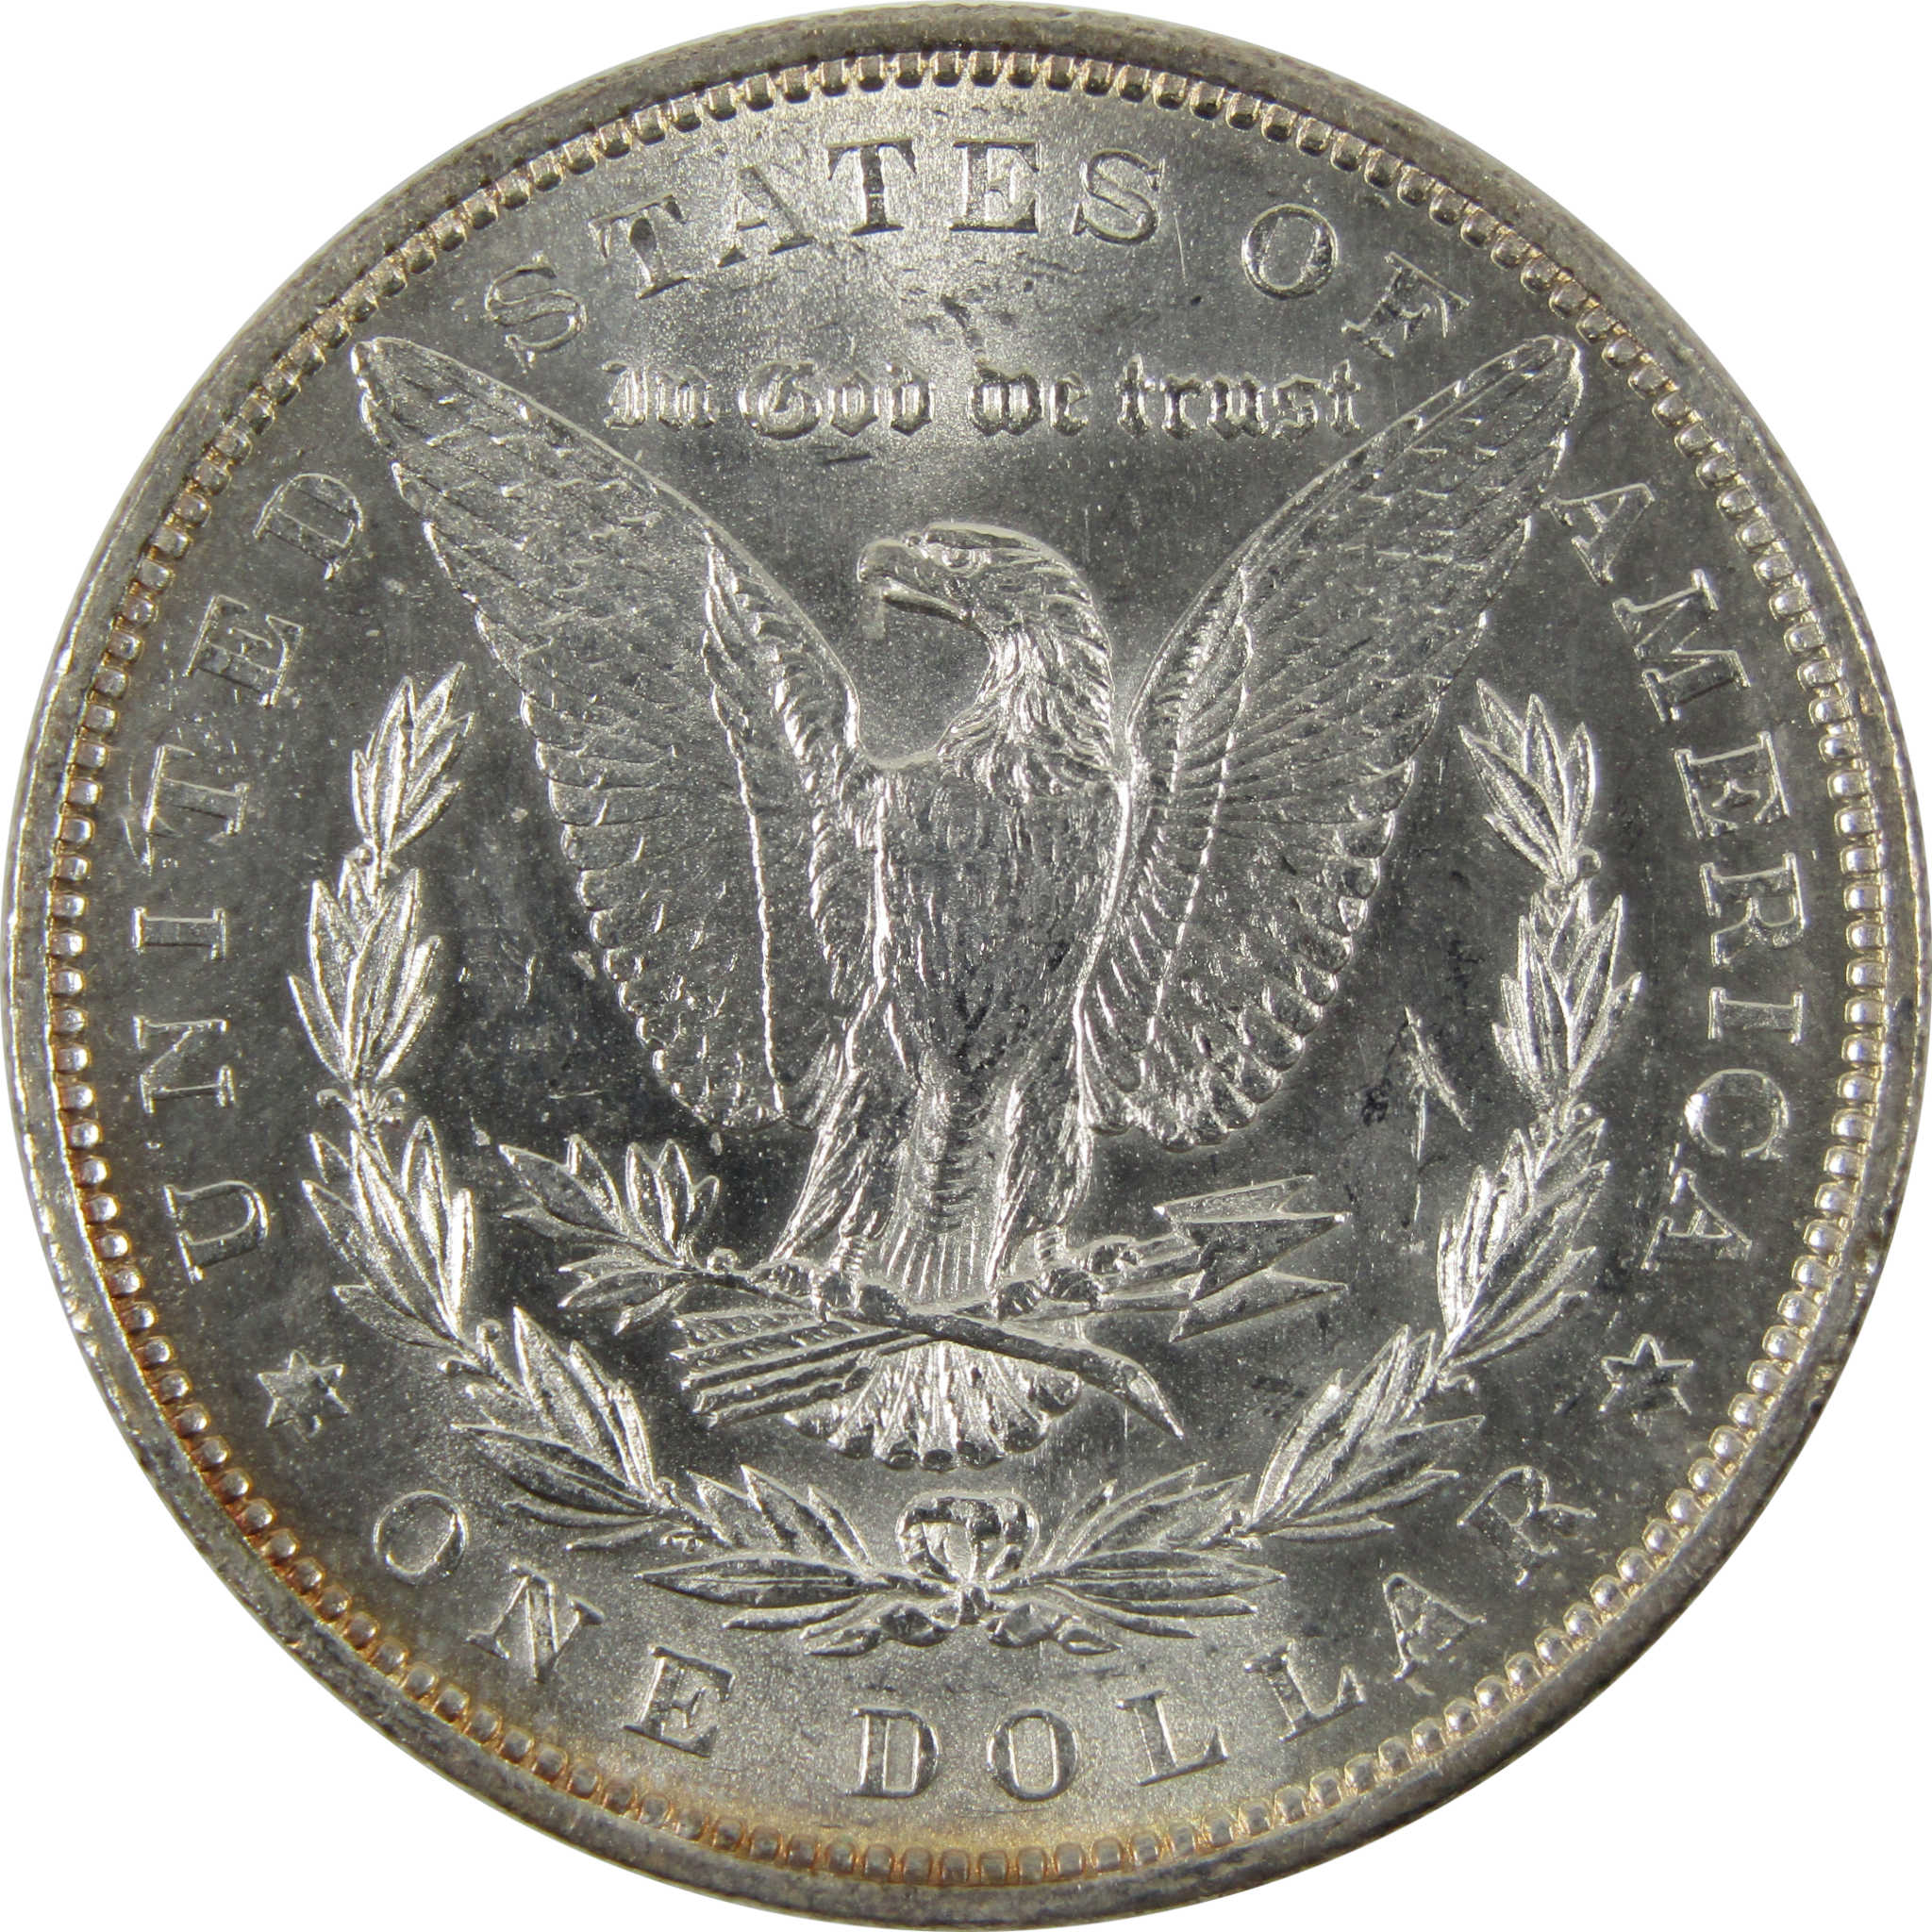 1878 7TF Rev 79 Morgan Dollar BU Uncirculated 90% Silver SKU:I8633 - Morgan coin - Morgan silver dollar - Morgan silver dollar for sale - Profile Coins &amp; Collectibles